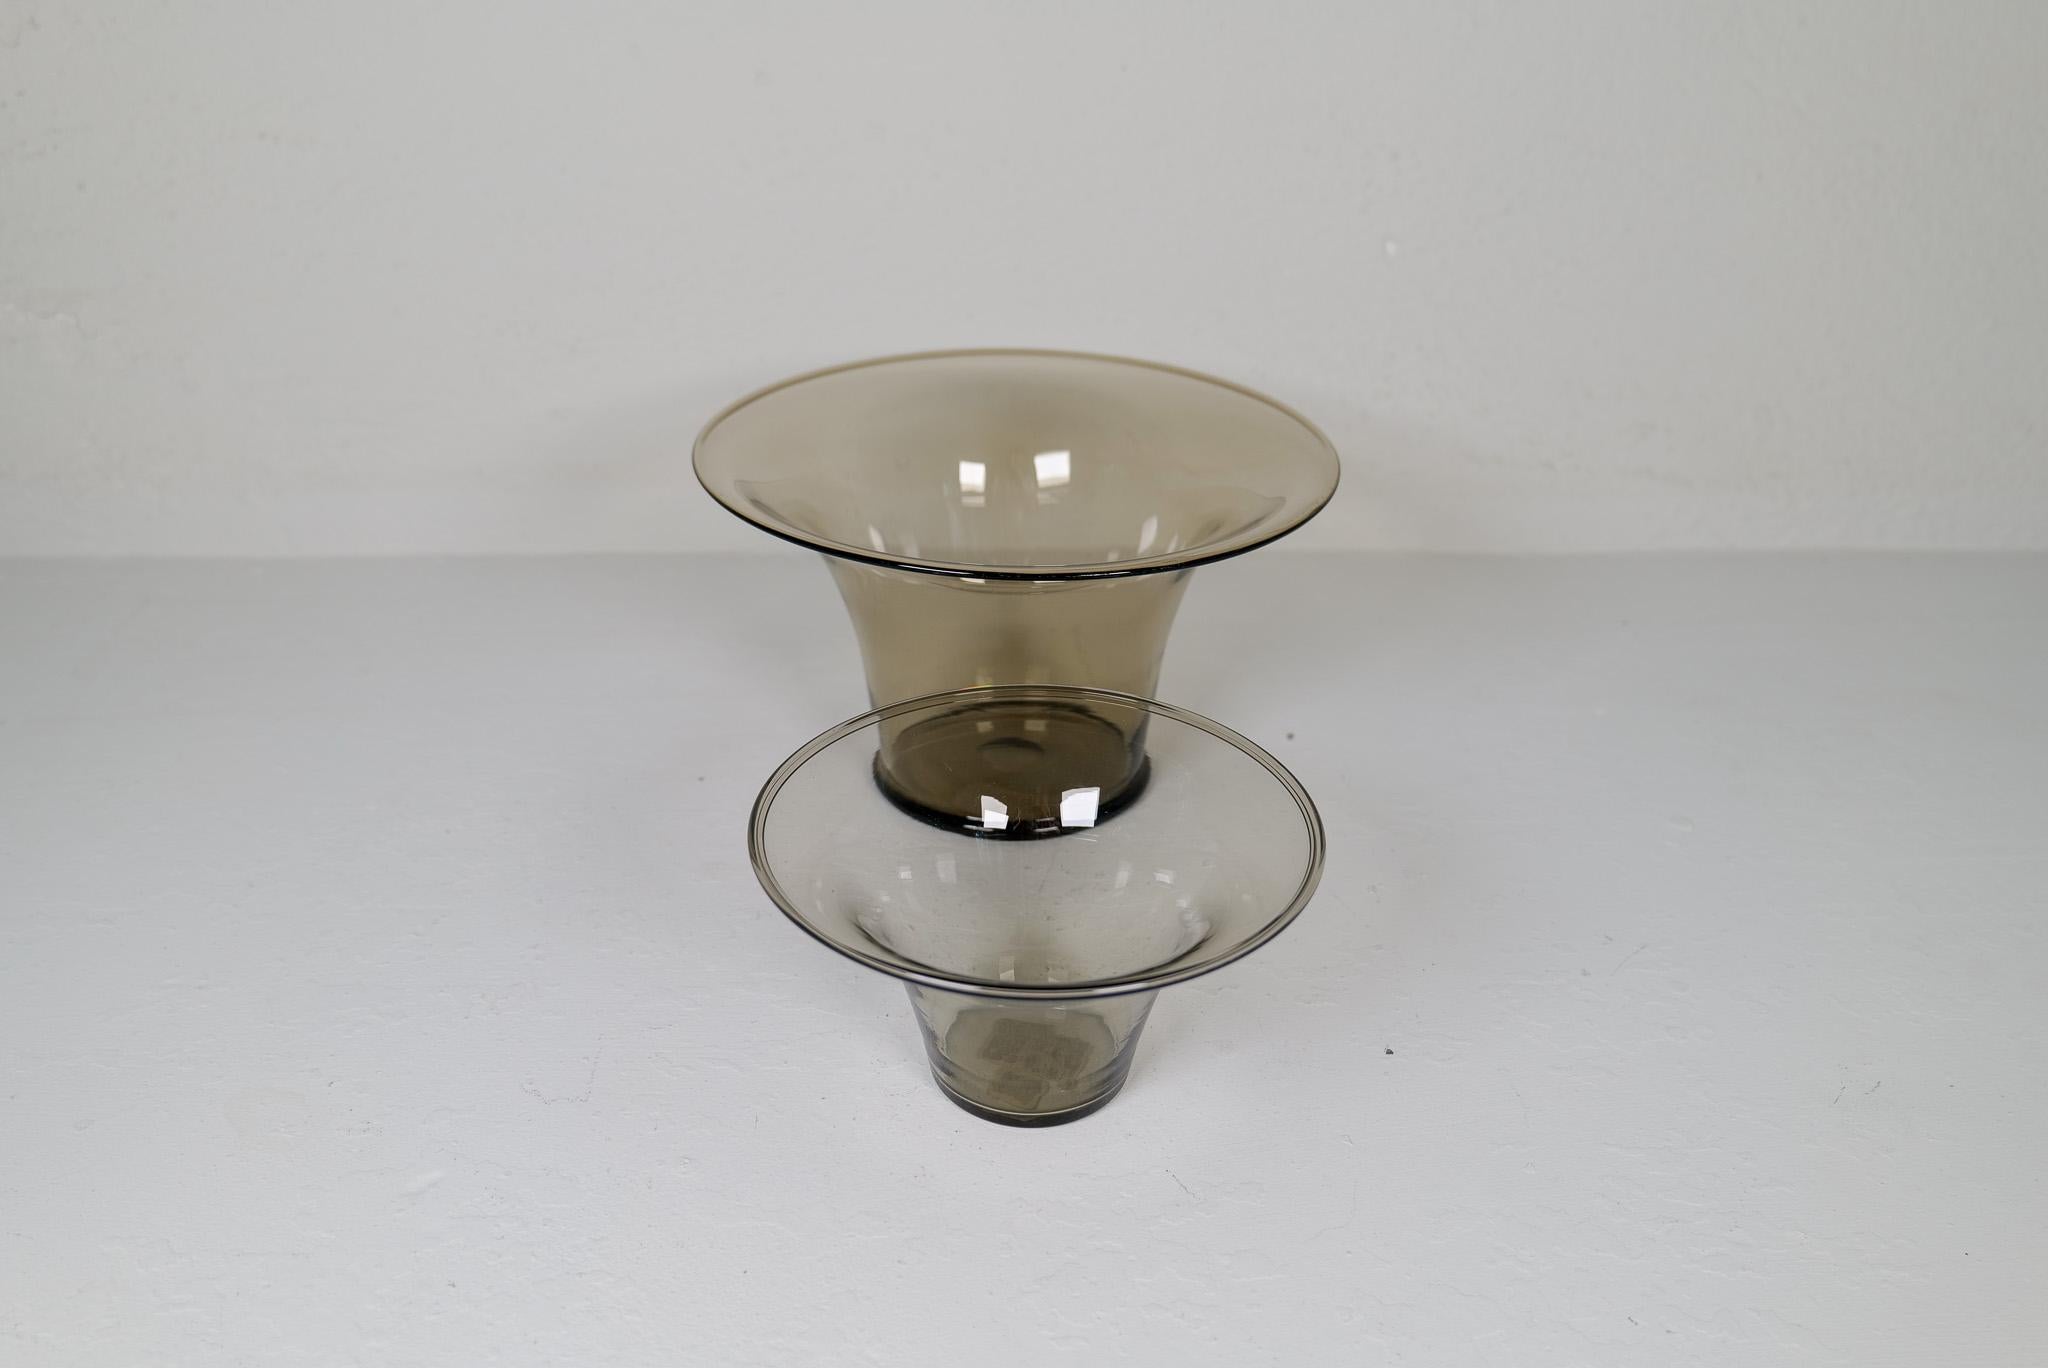  Art Deco Set of 2 Glass Bowls Simon Gate Orrefors, Sweden 1920s For Sale 1